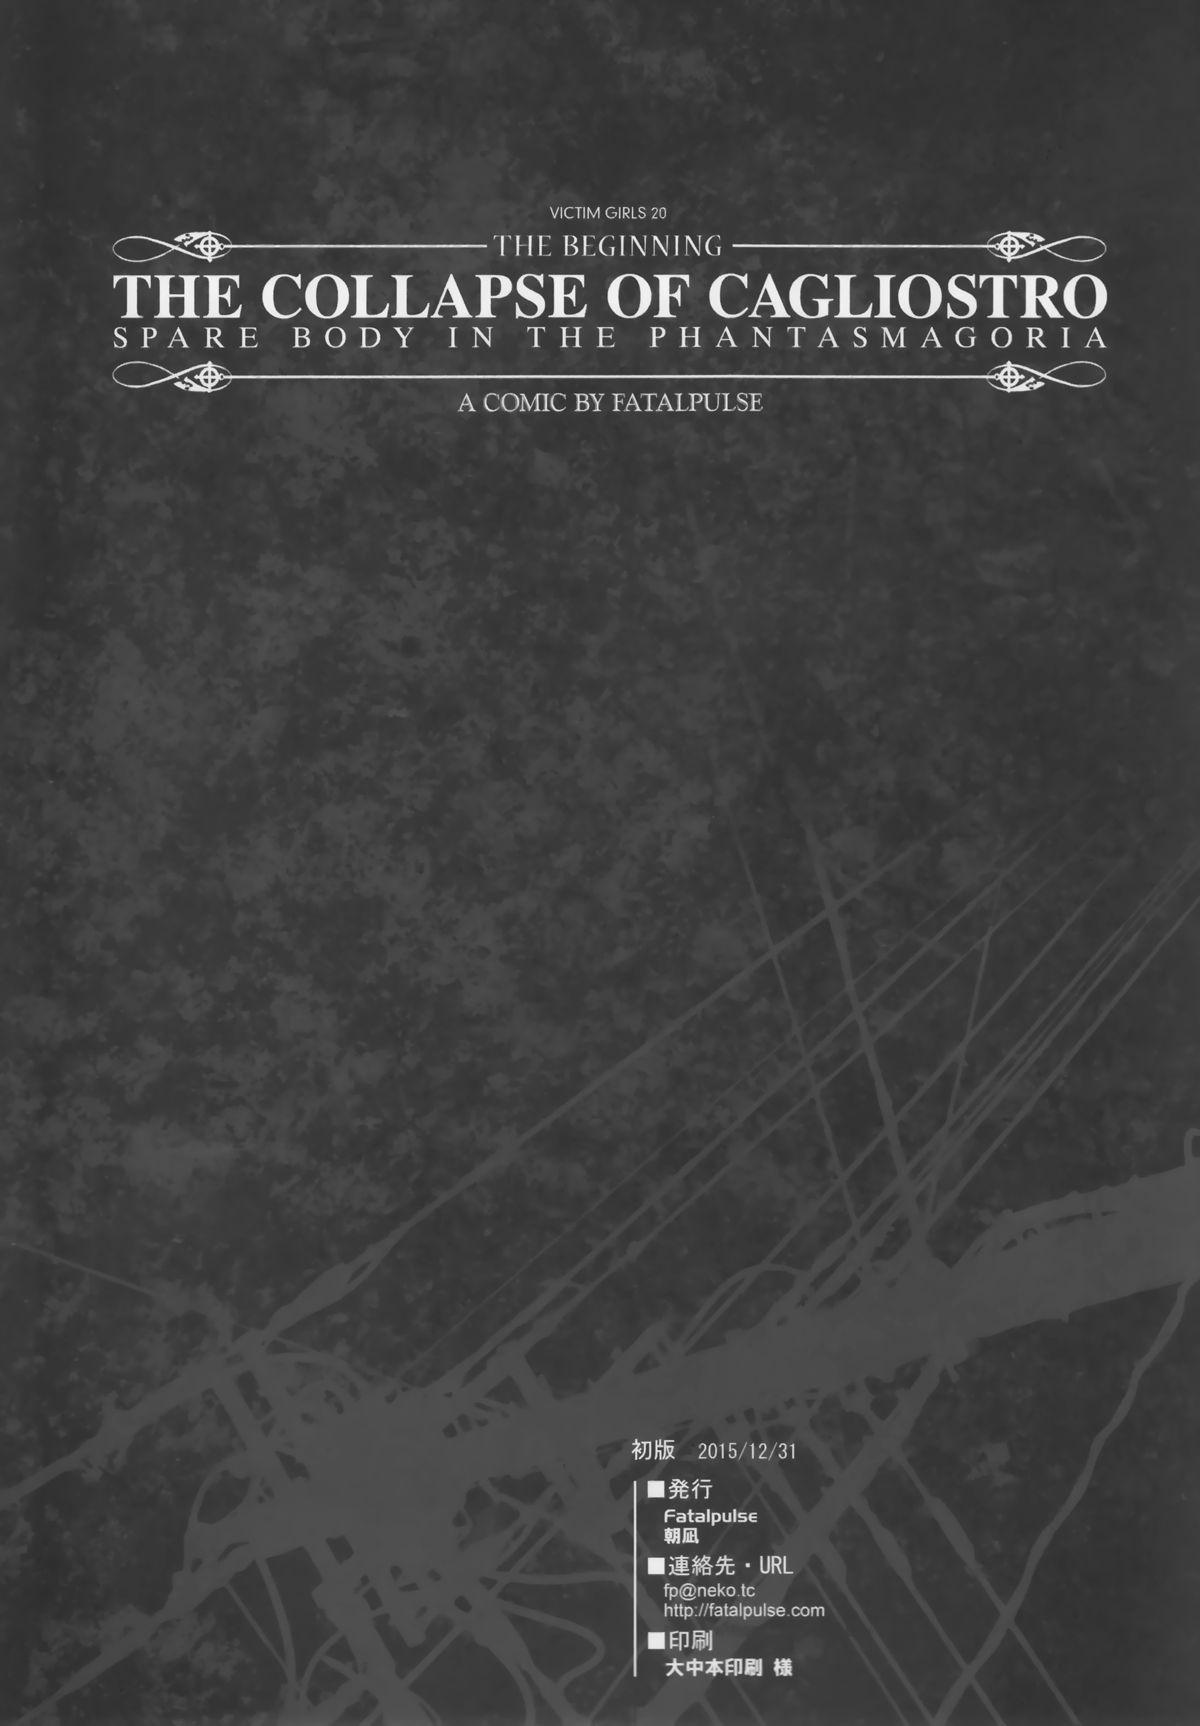 Victim Girls 20 THE COLLAPSE OF CAGLIOSTRO 30